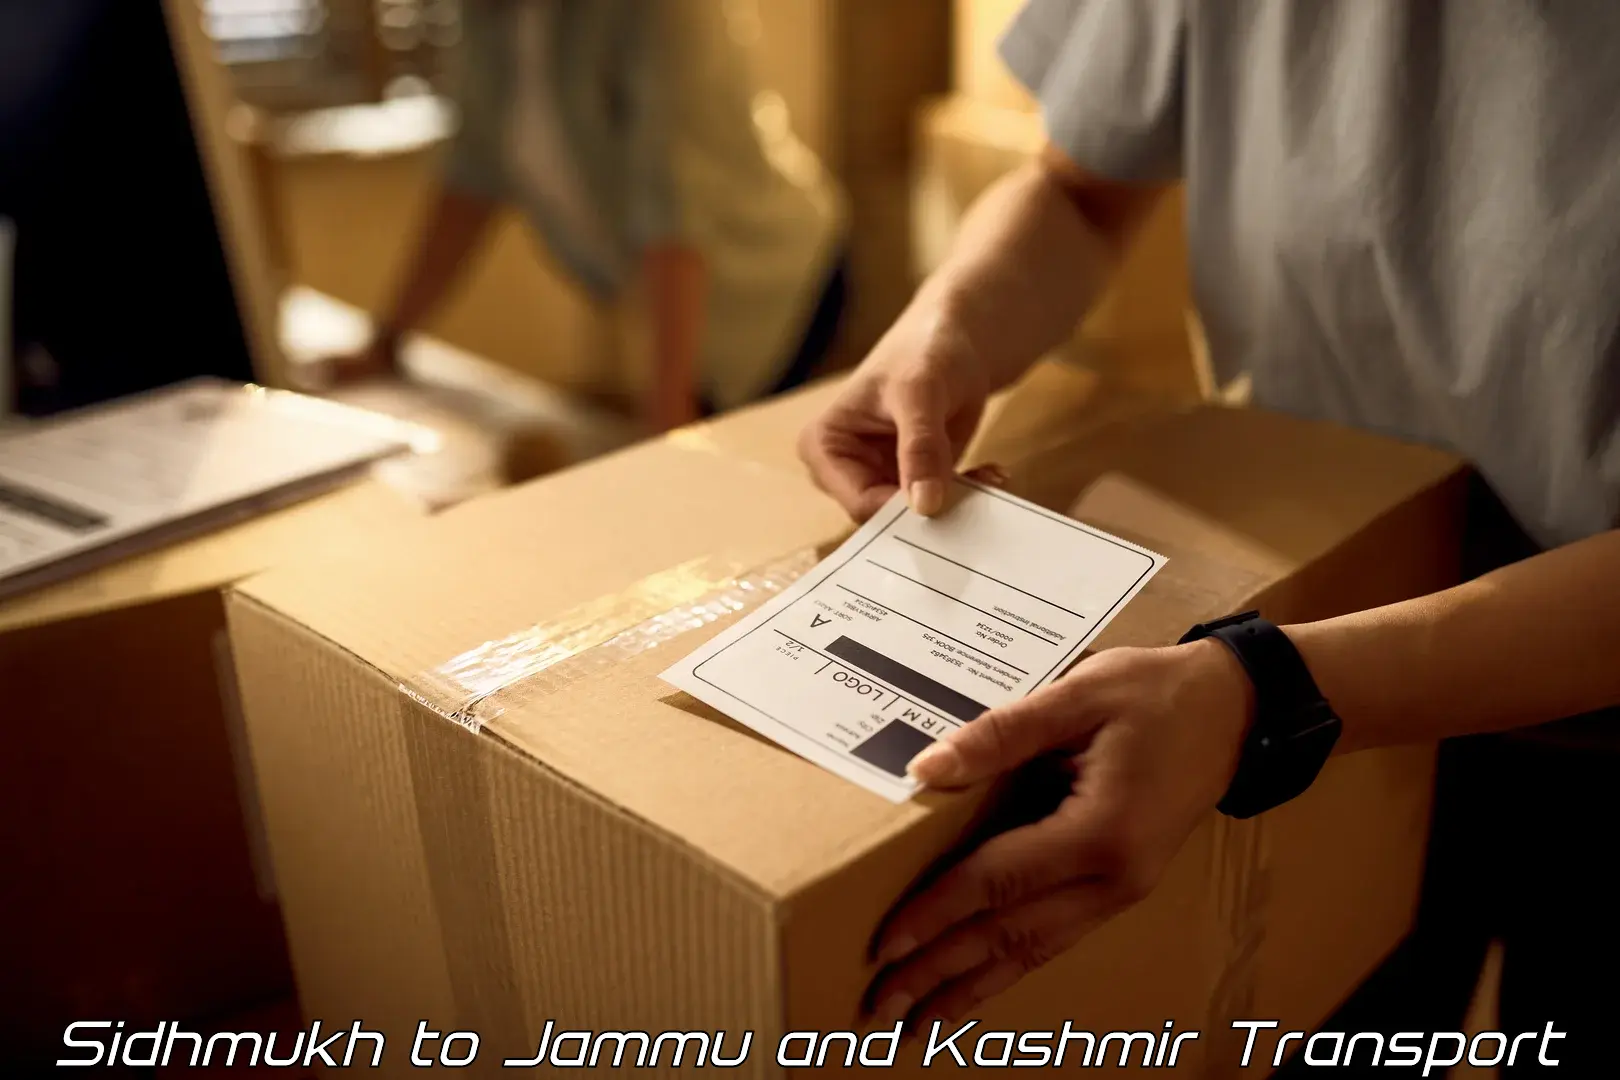 Shipping partner in Sidhmukh to Kargil